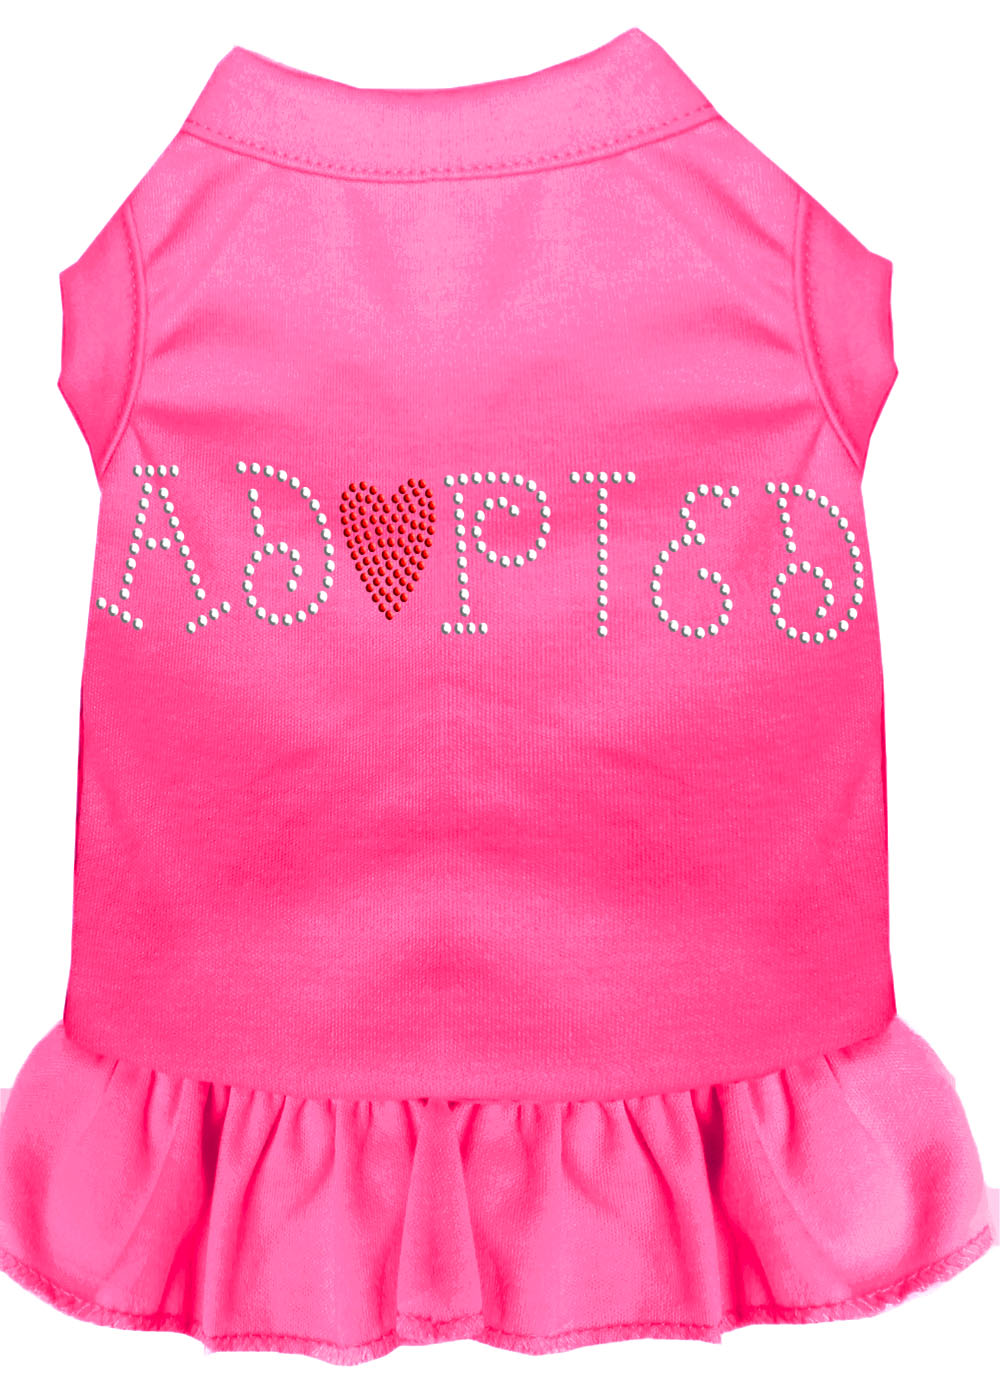 Adopted Rhinestone Dress Bright Pink XL